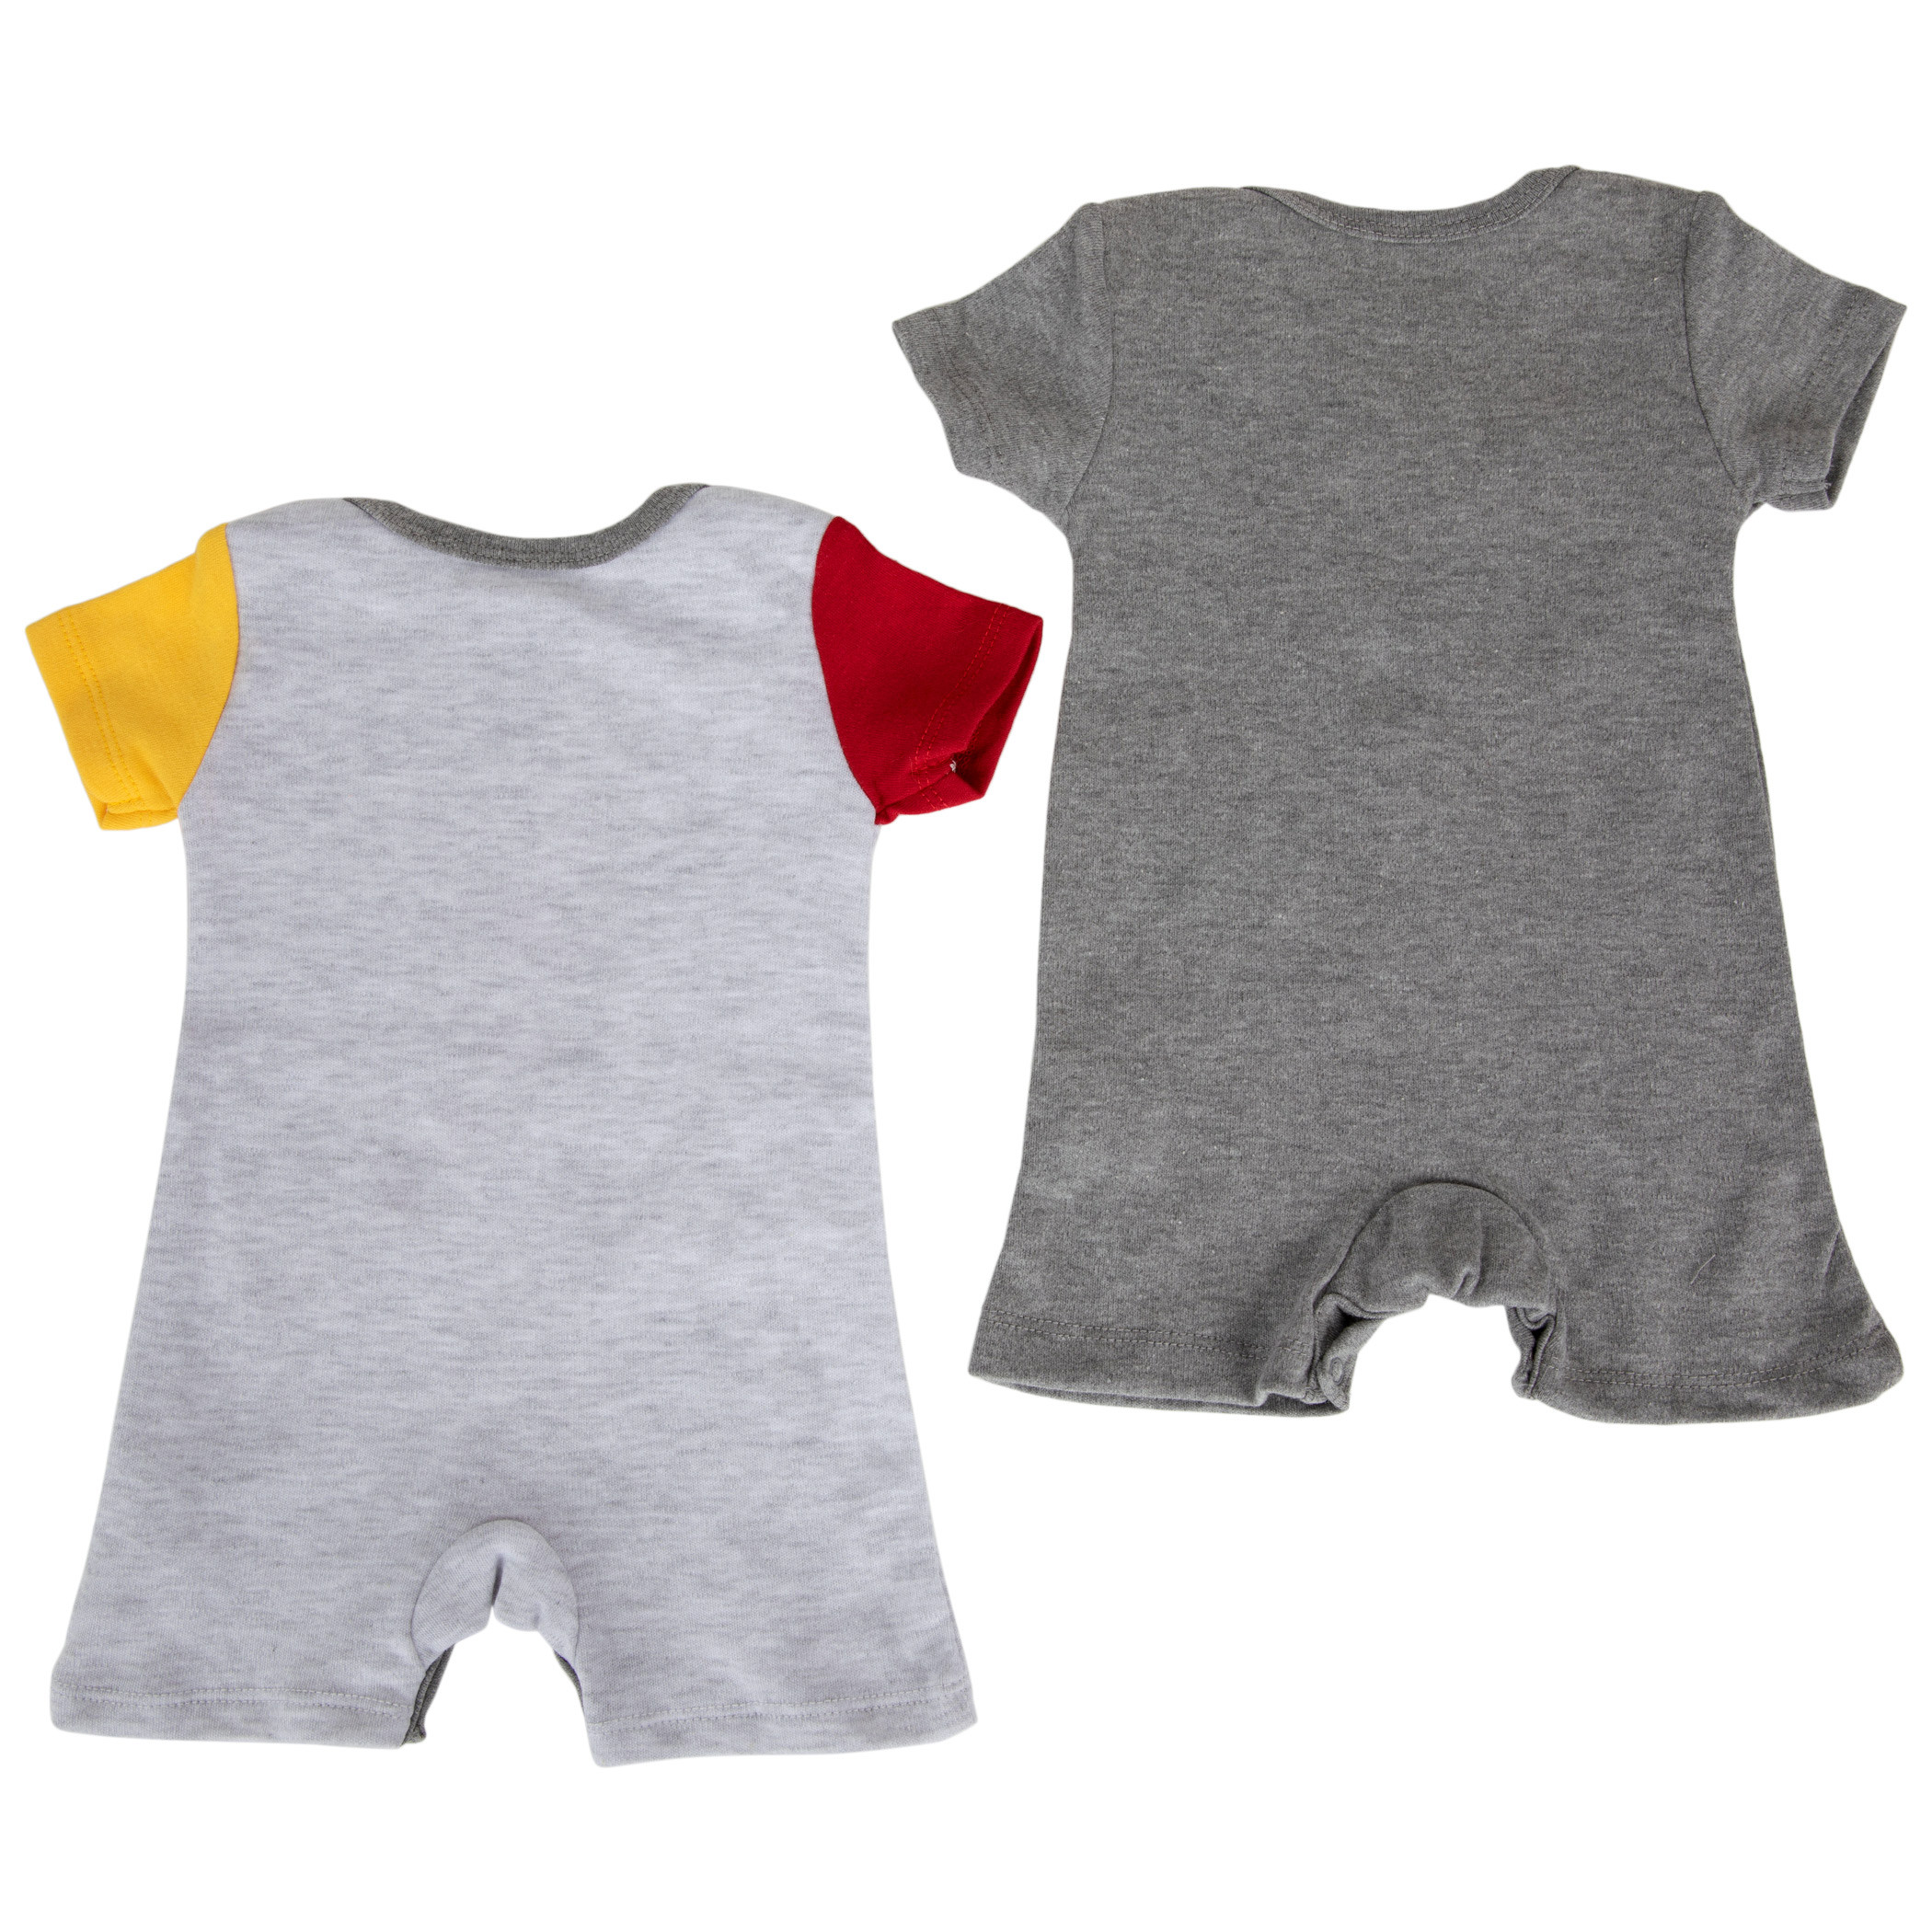 Harry Potter Solemnly Swear Uniform Infant 2-Pack Romper Bodysuit Set